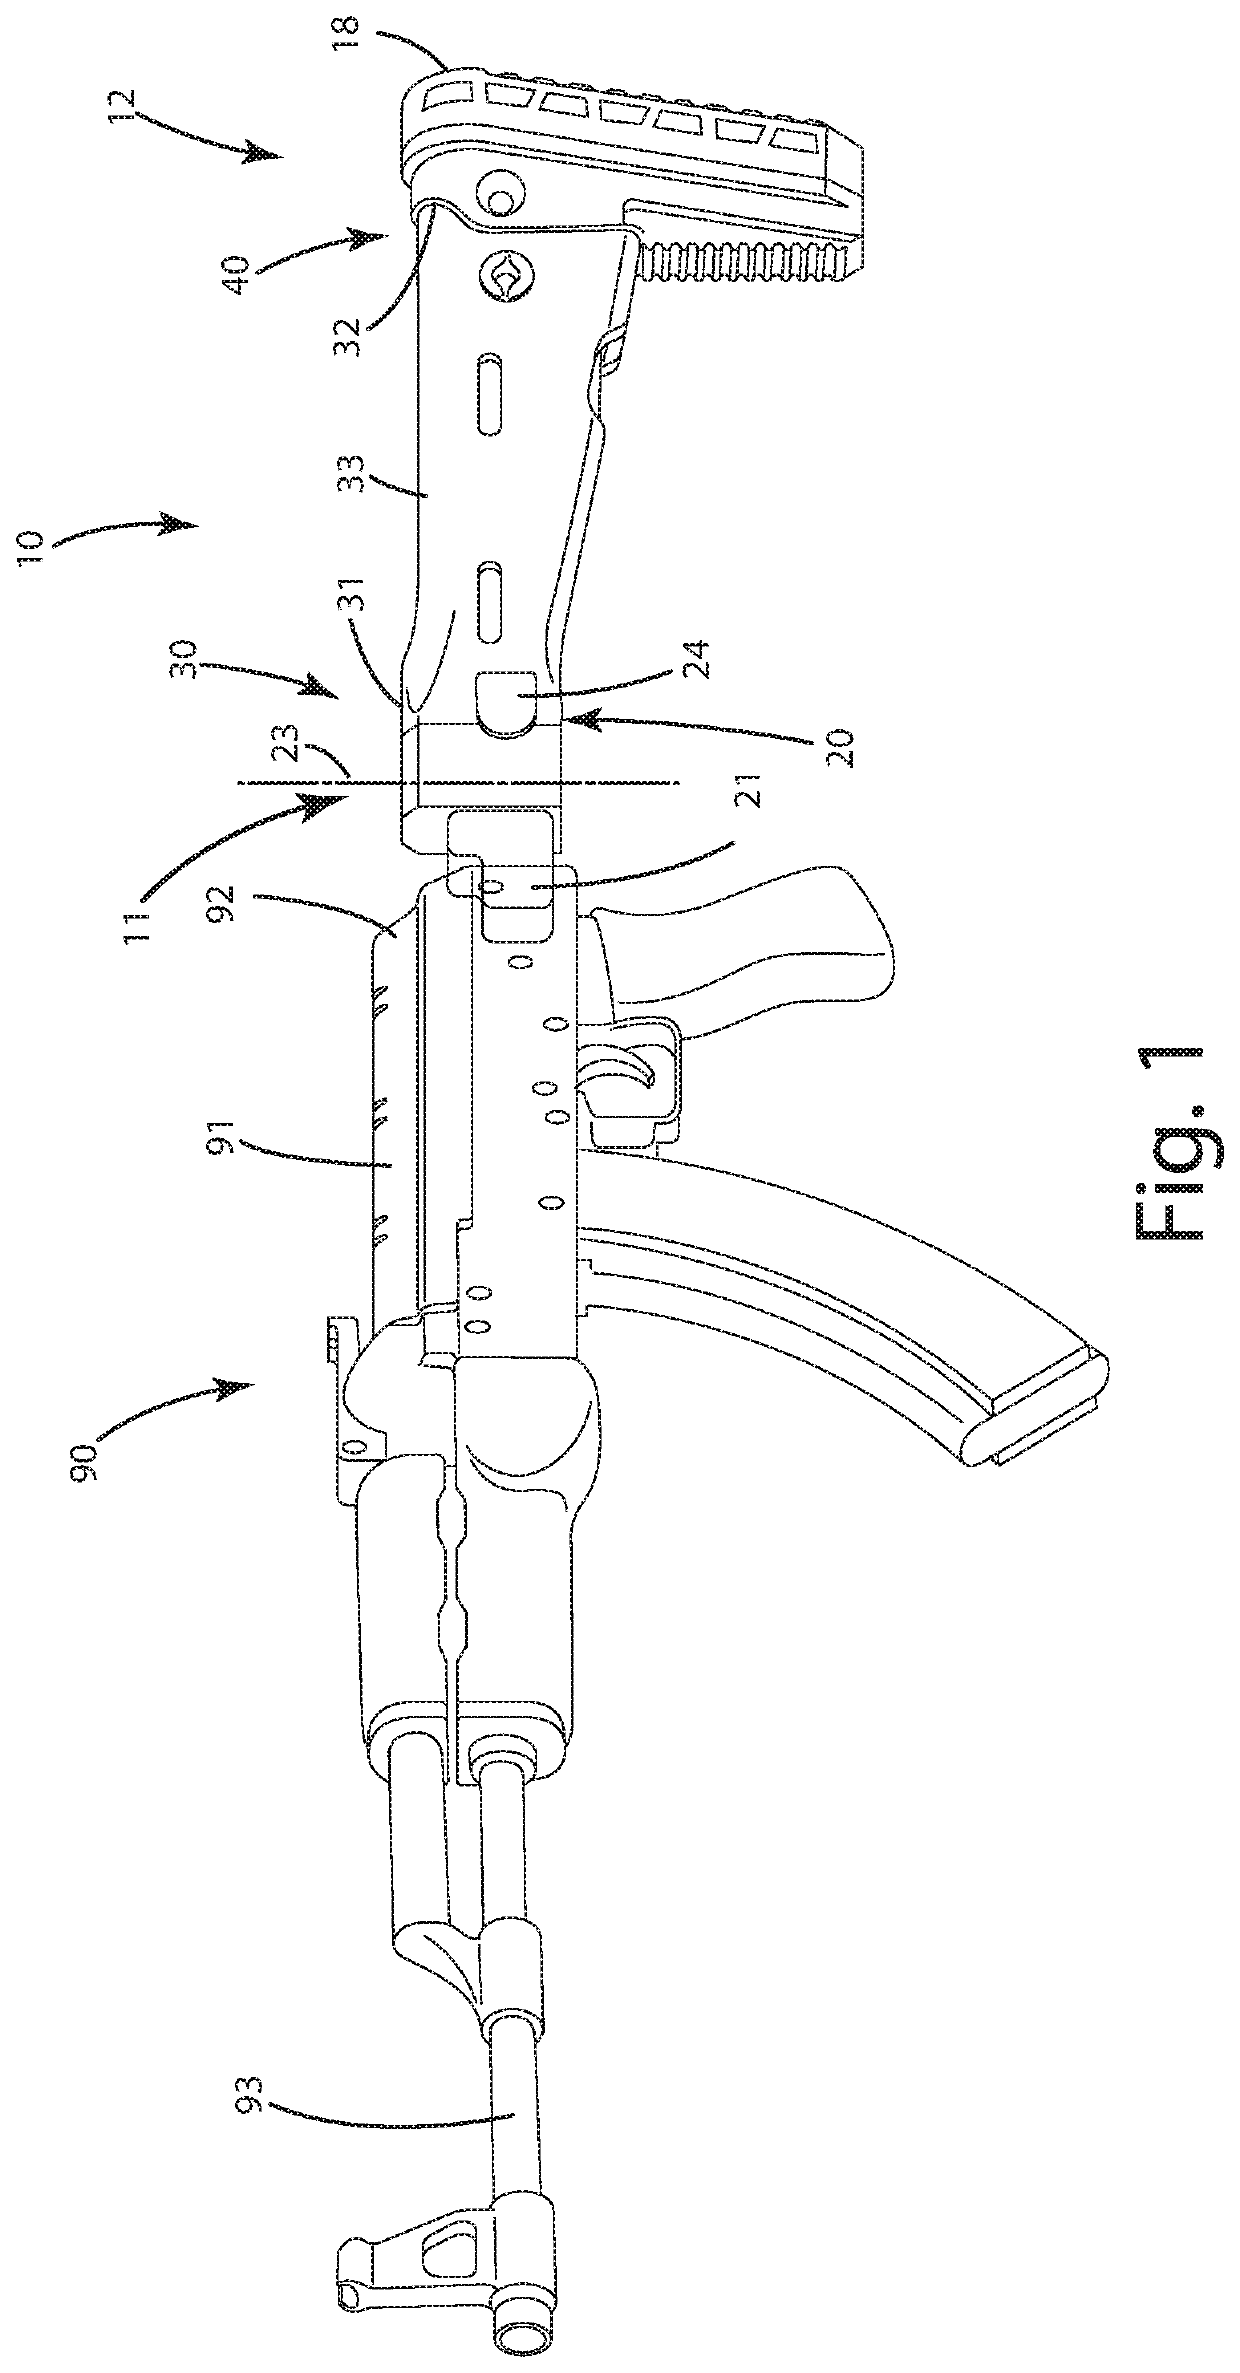 Firearm adjustable length stock assembly